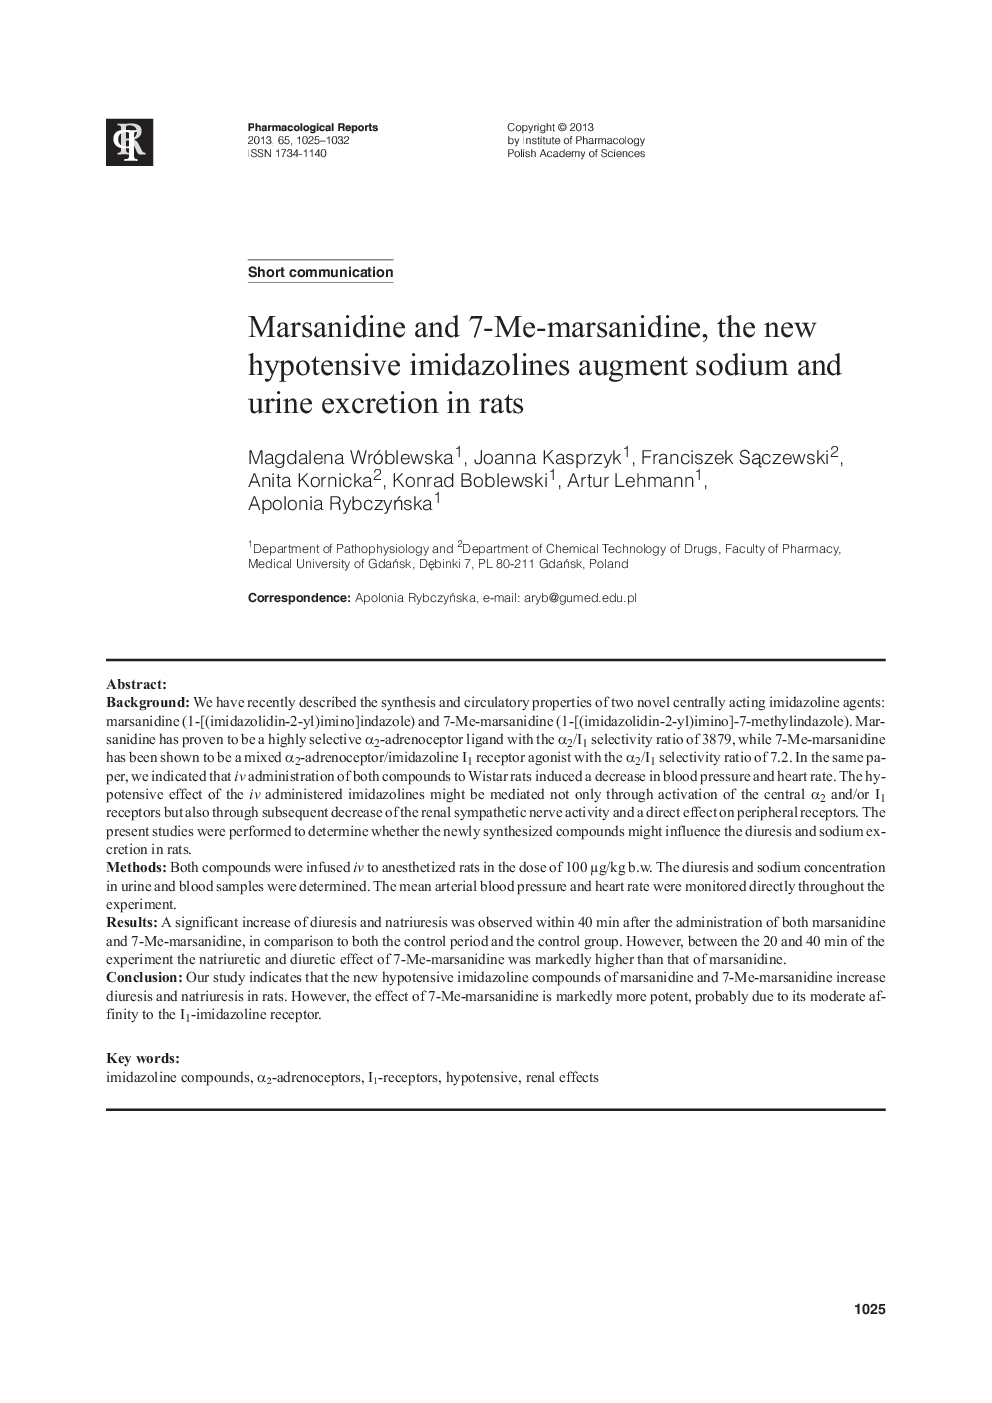 Marsanidine and 7-Me-marsanidine, the new hypotensive imidazolines augment sodium and urine excretion in rats